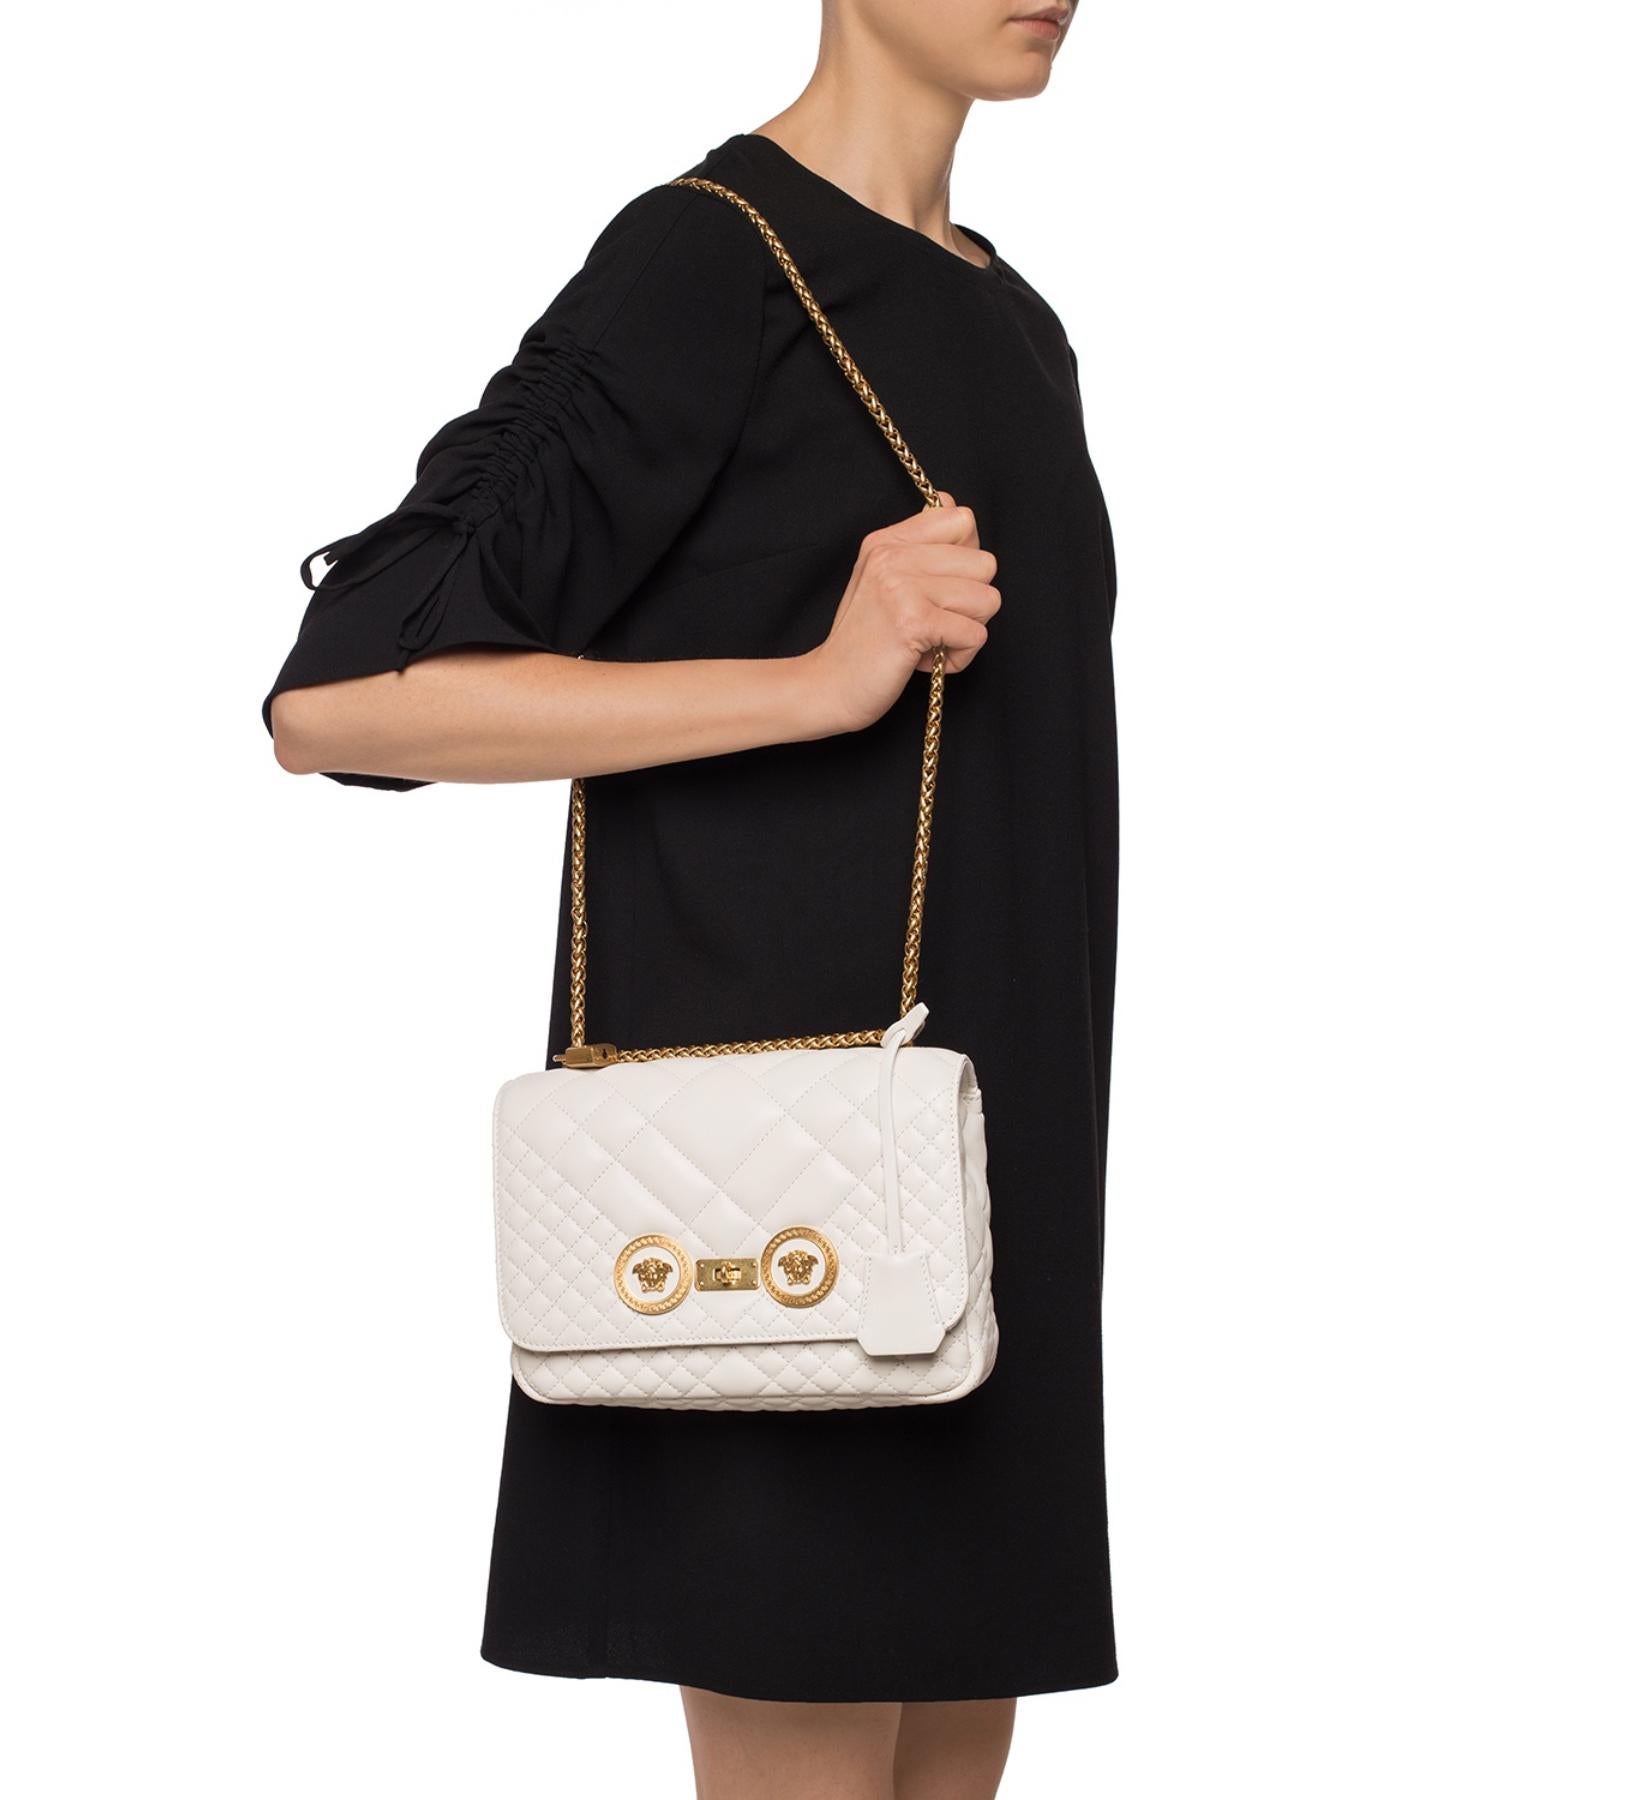 white handbag with gold chain